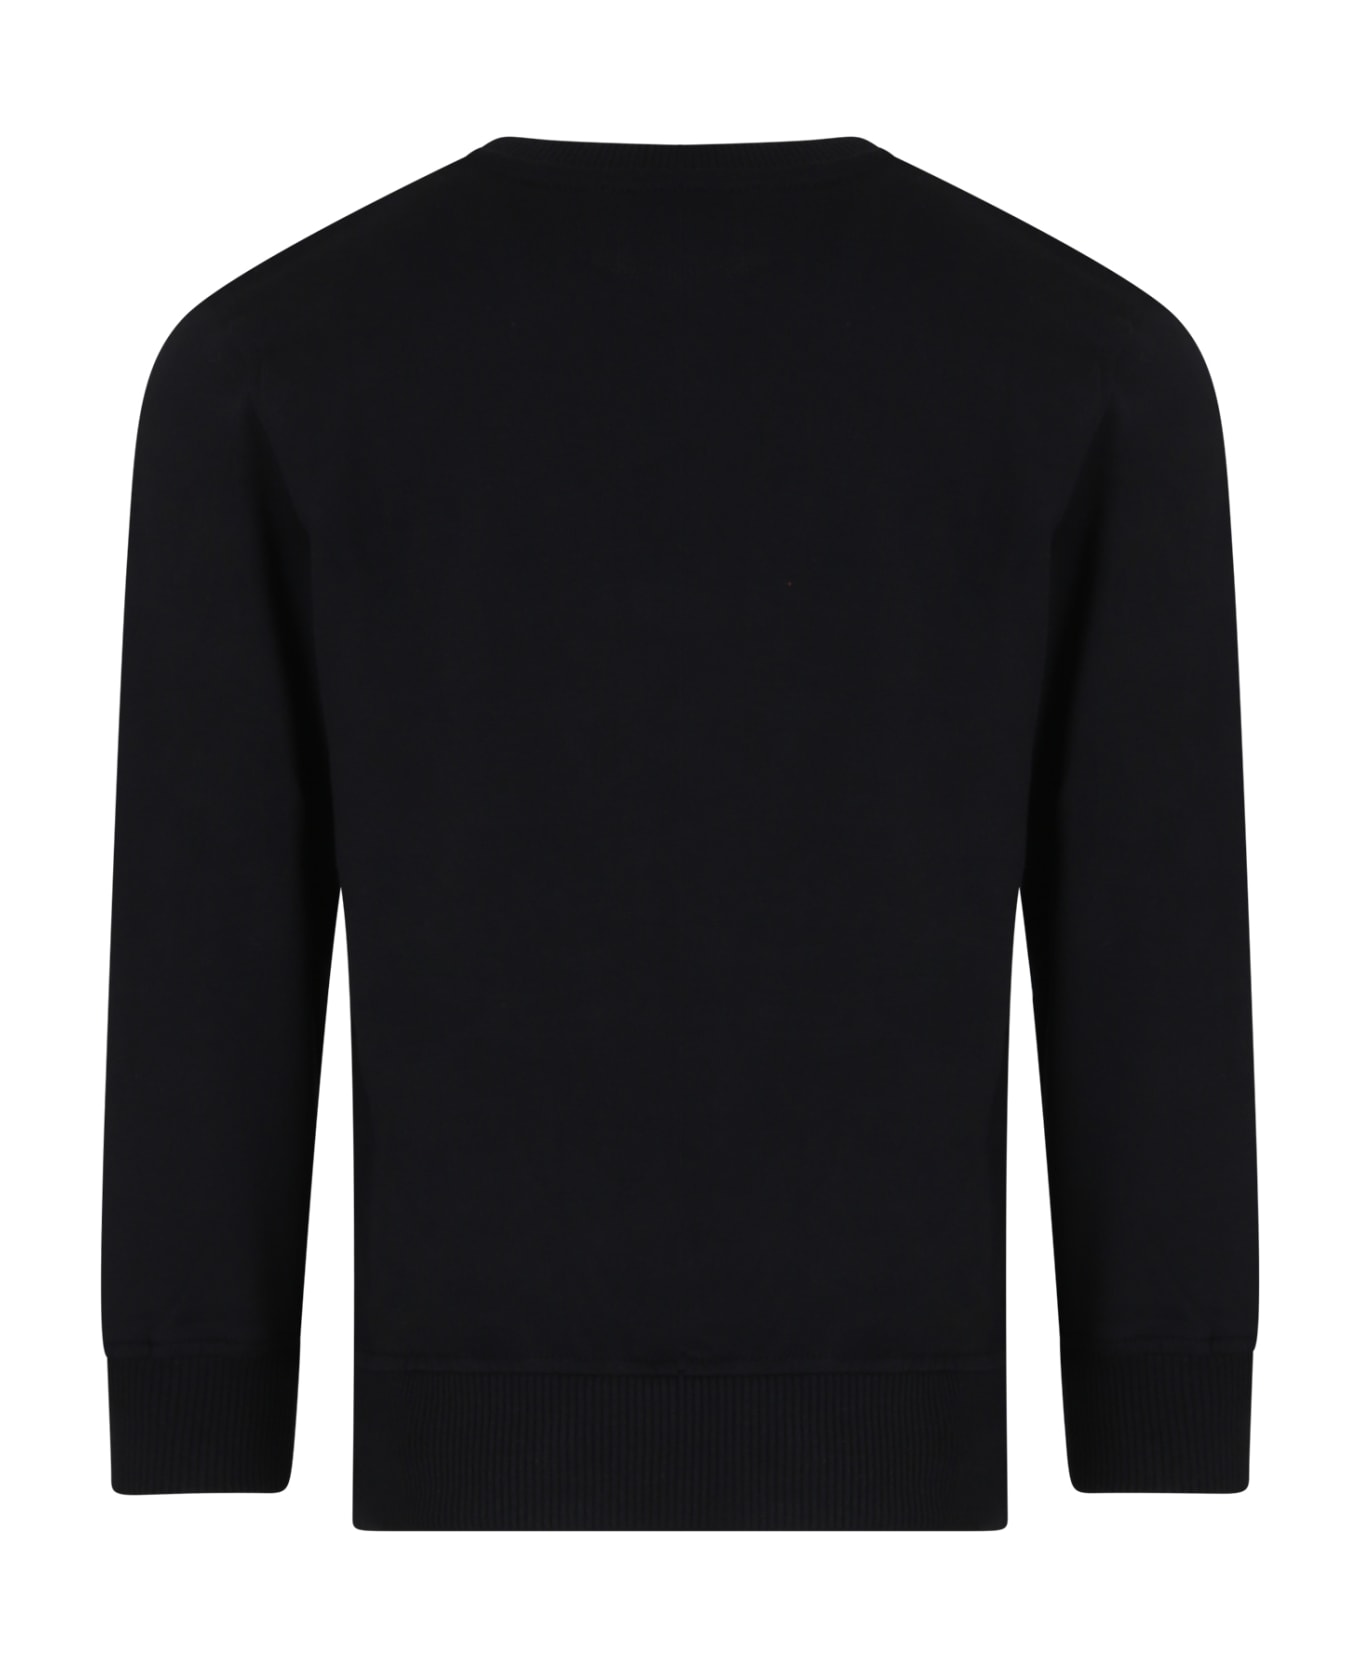 Moschino Black Sweatshirt For Kids With Teddy Bear And Logo - Black